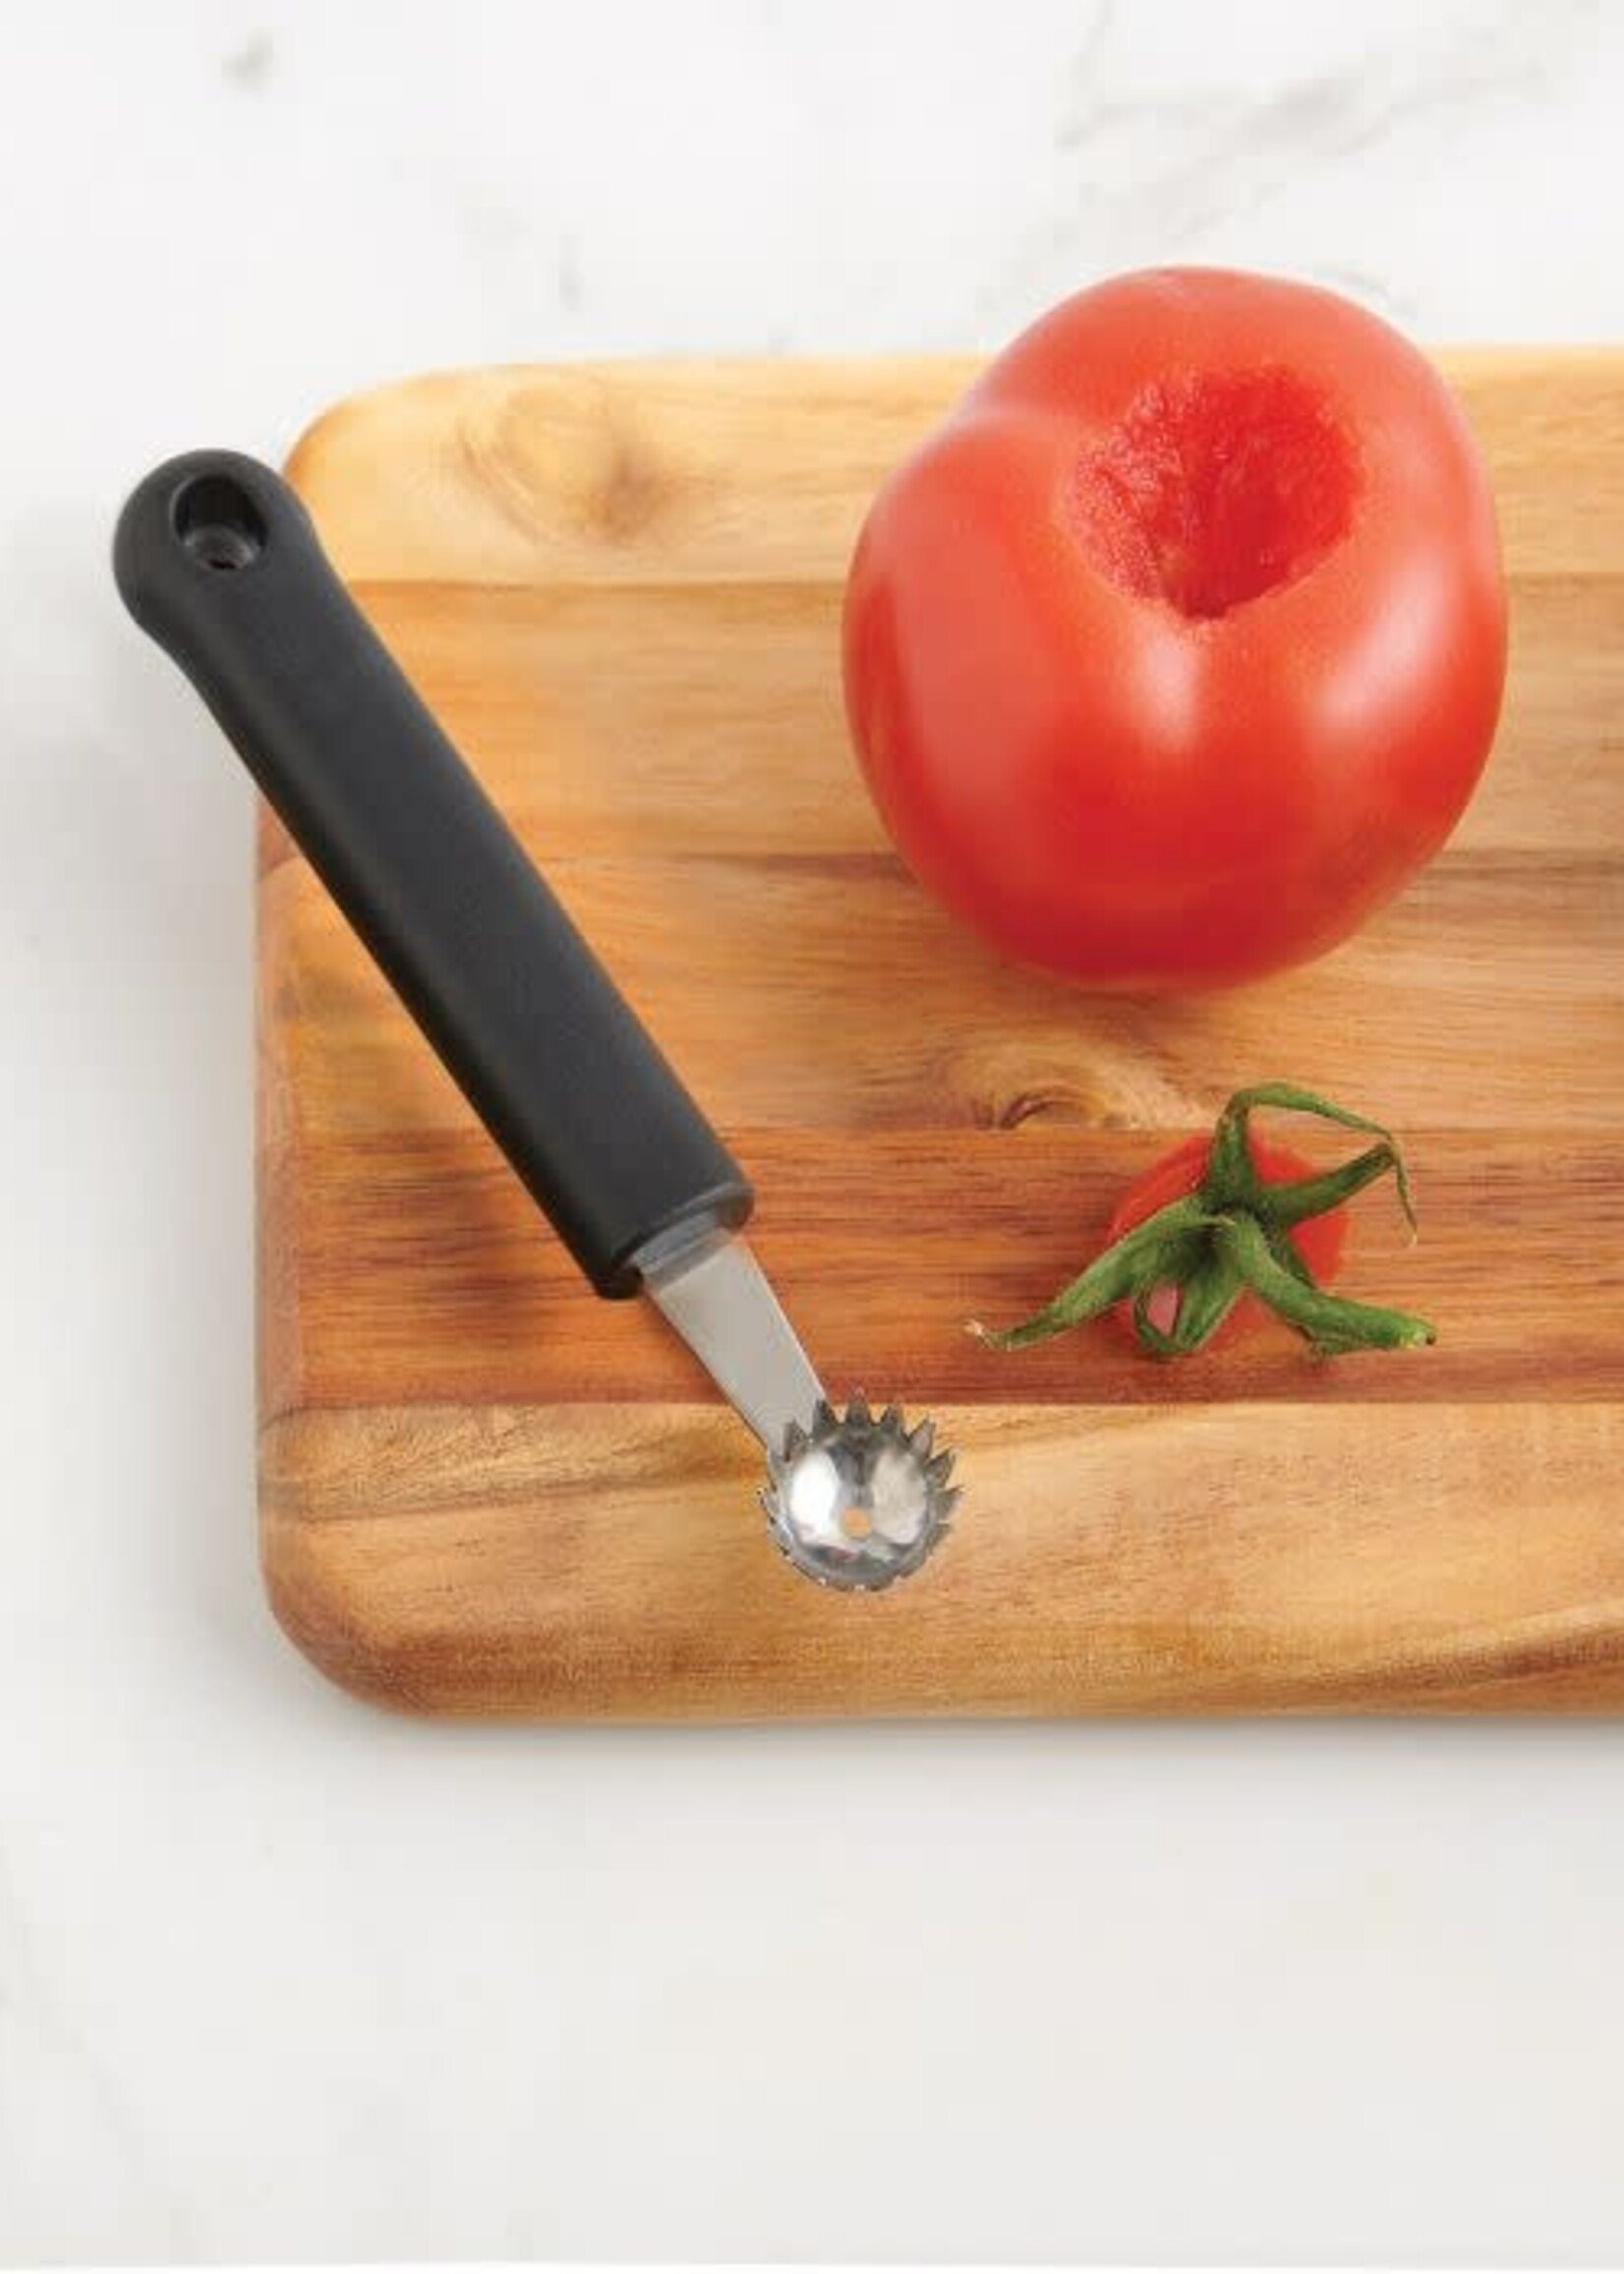 Cutlery-Pro Tomato Corer